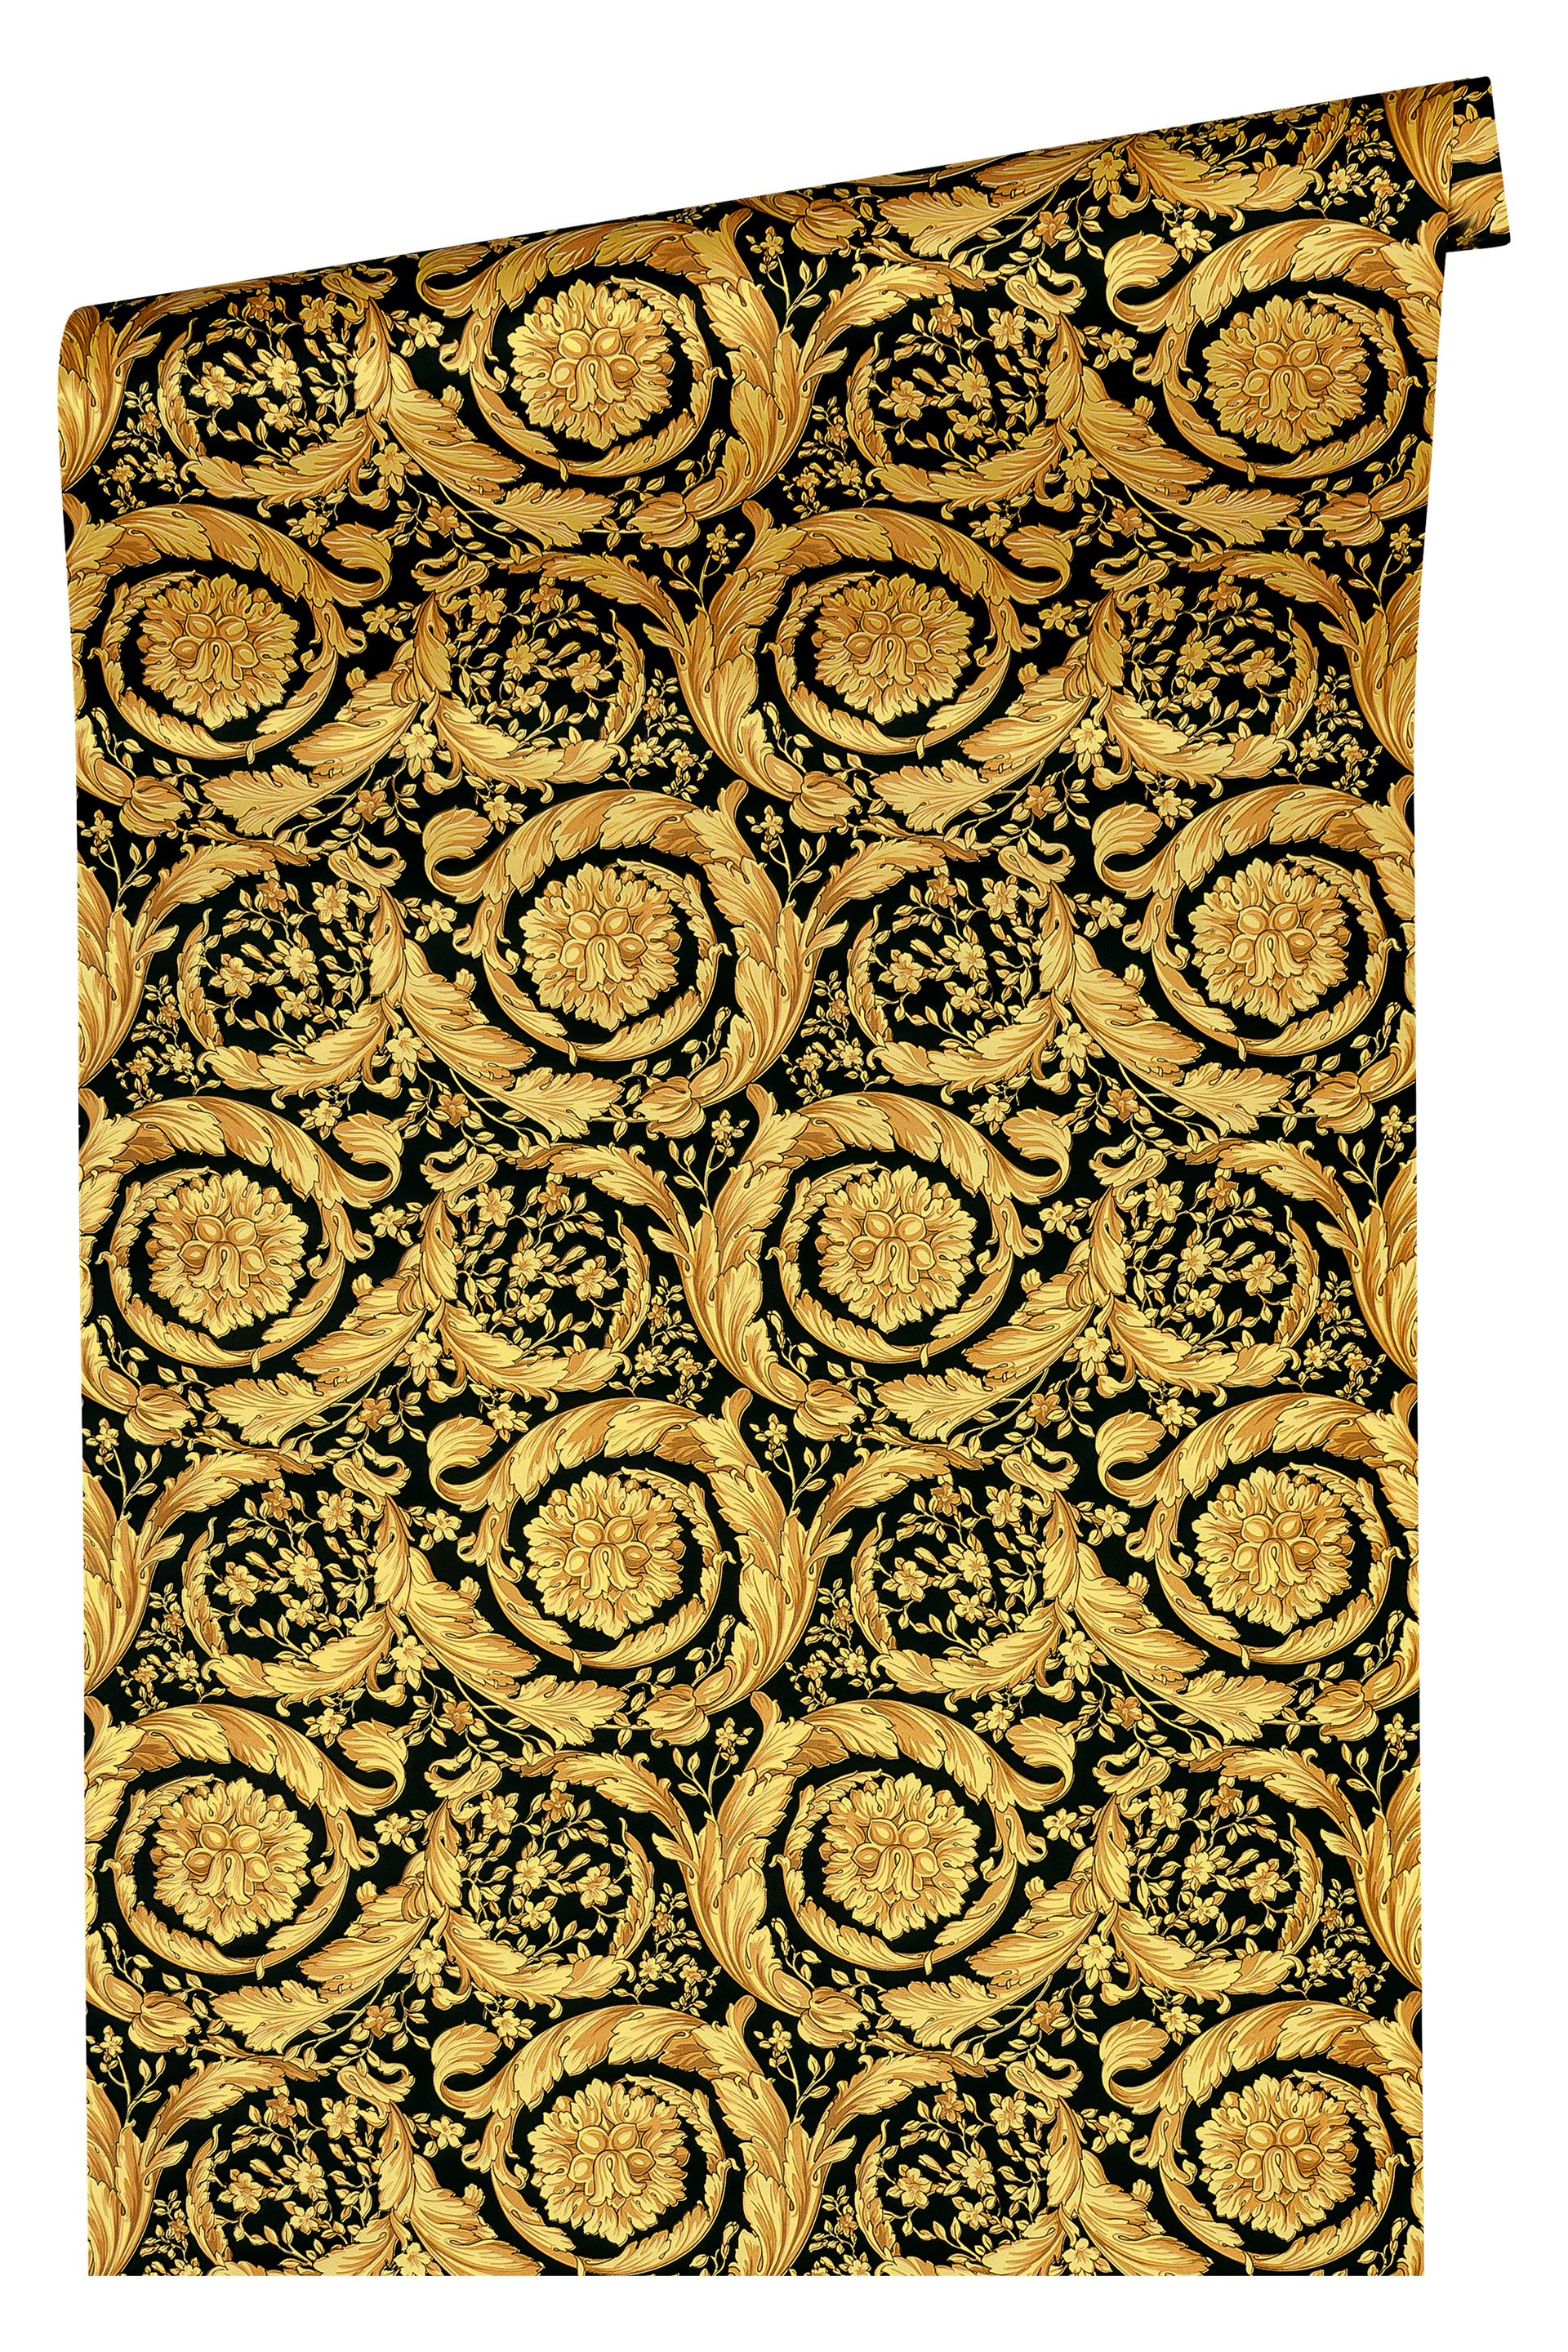 Versace wallpaper Versace 3, Design Tapete, gold, schwarz 935834